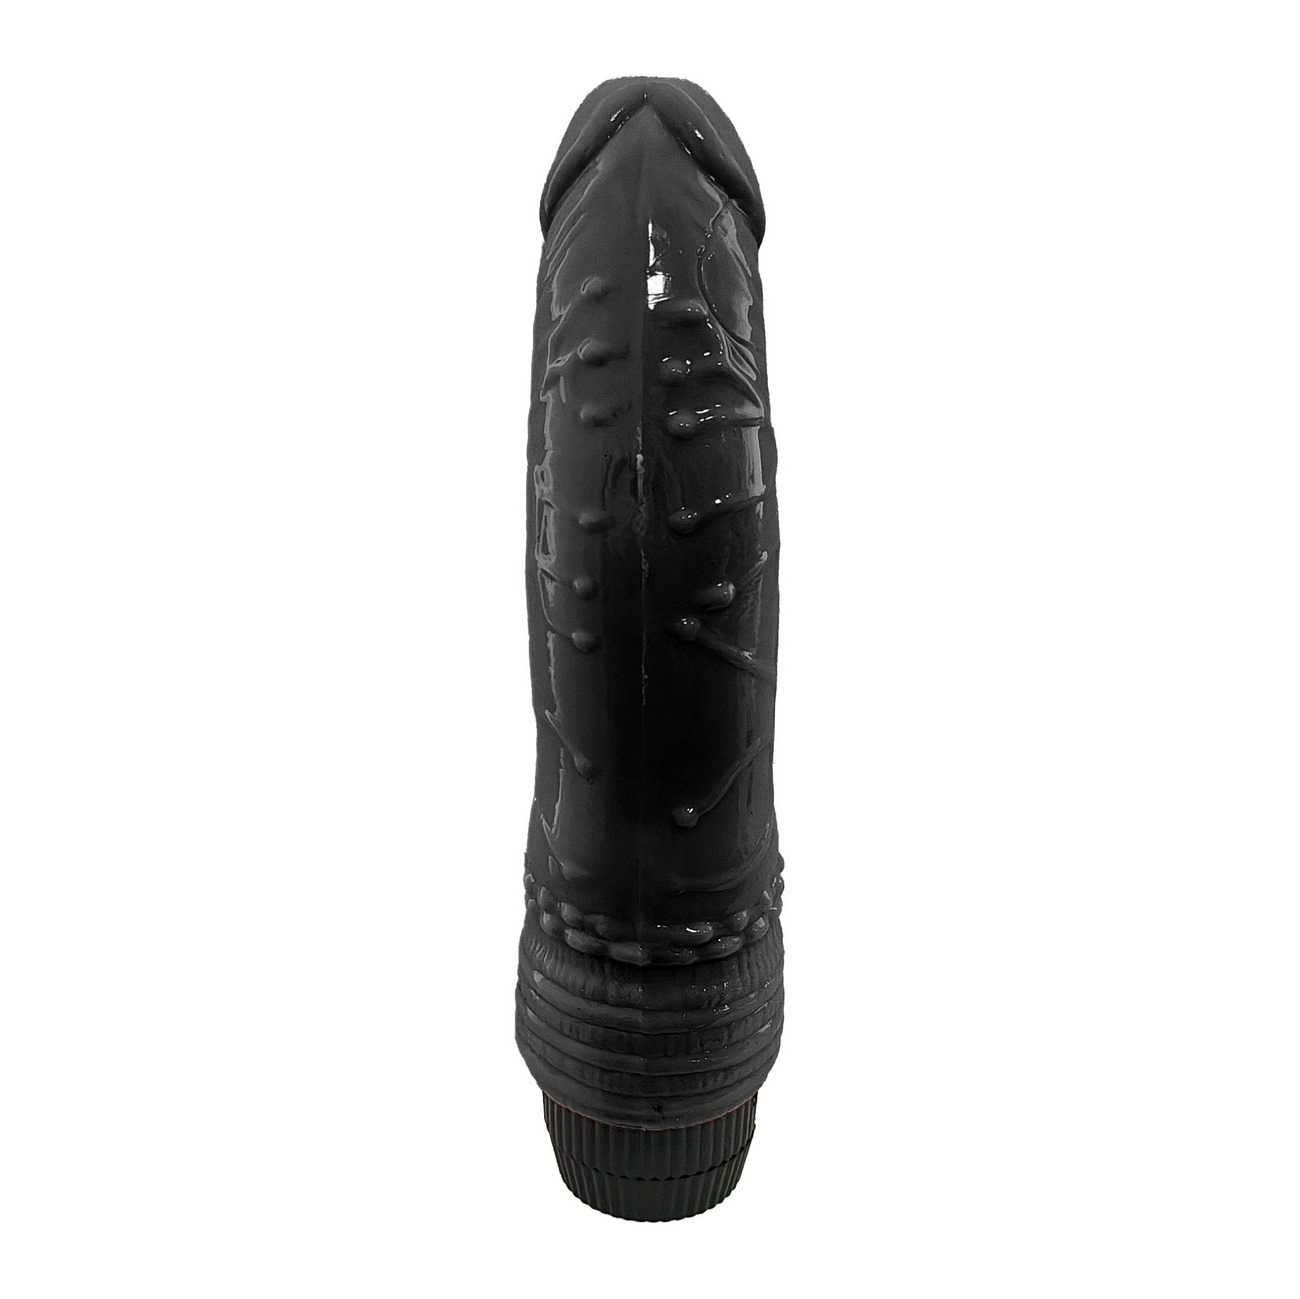 Vibrador Consolador Pene Juguete Sexual + Baterias 26495-9